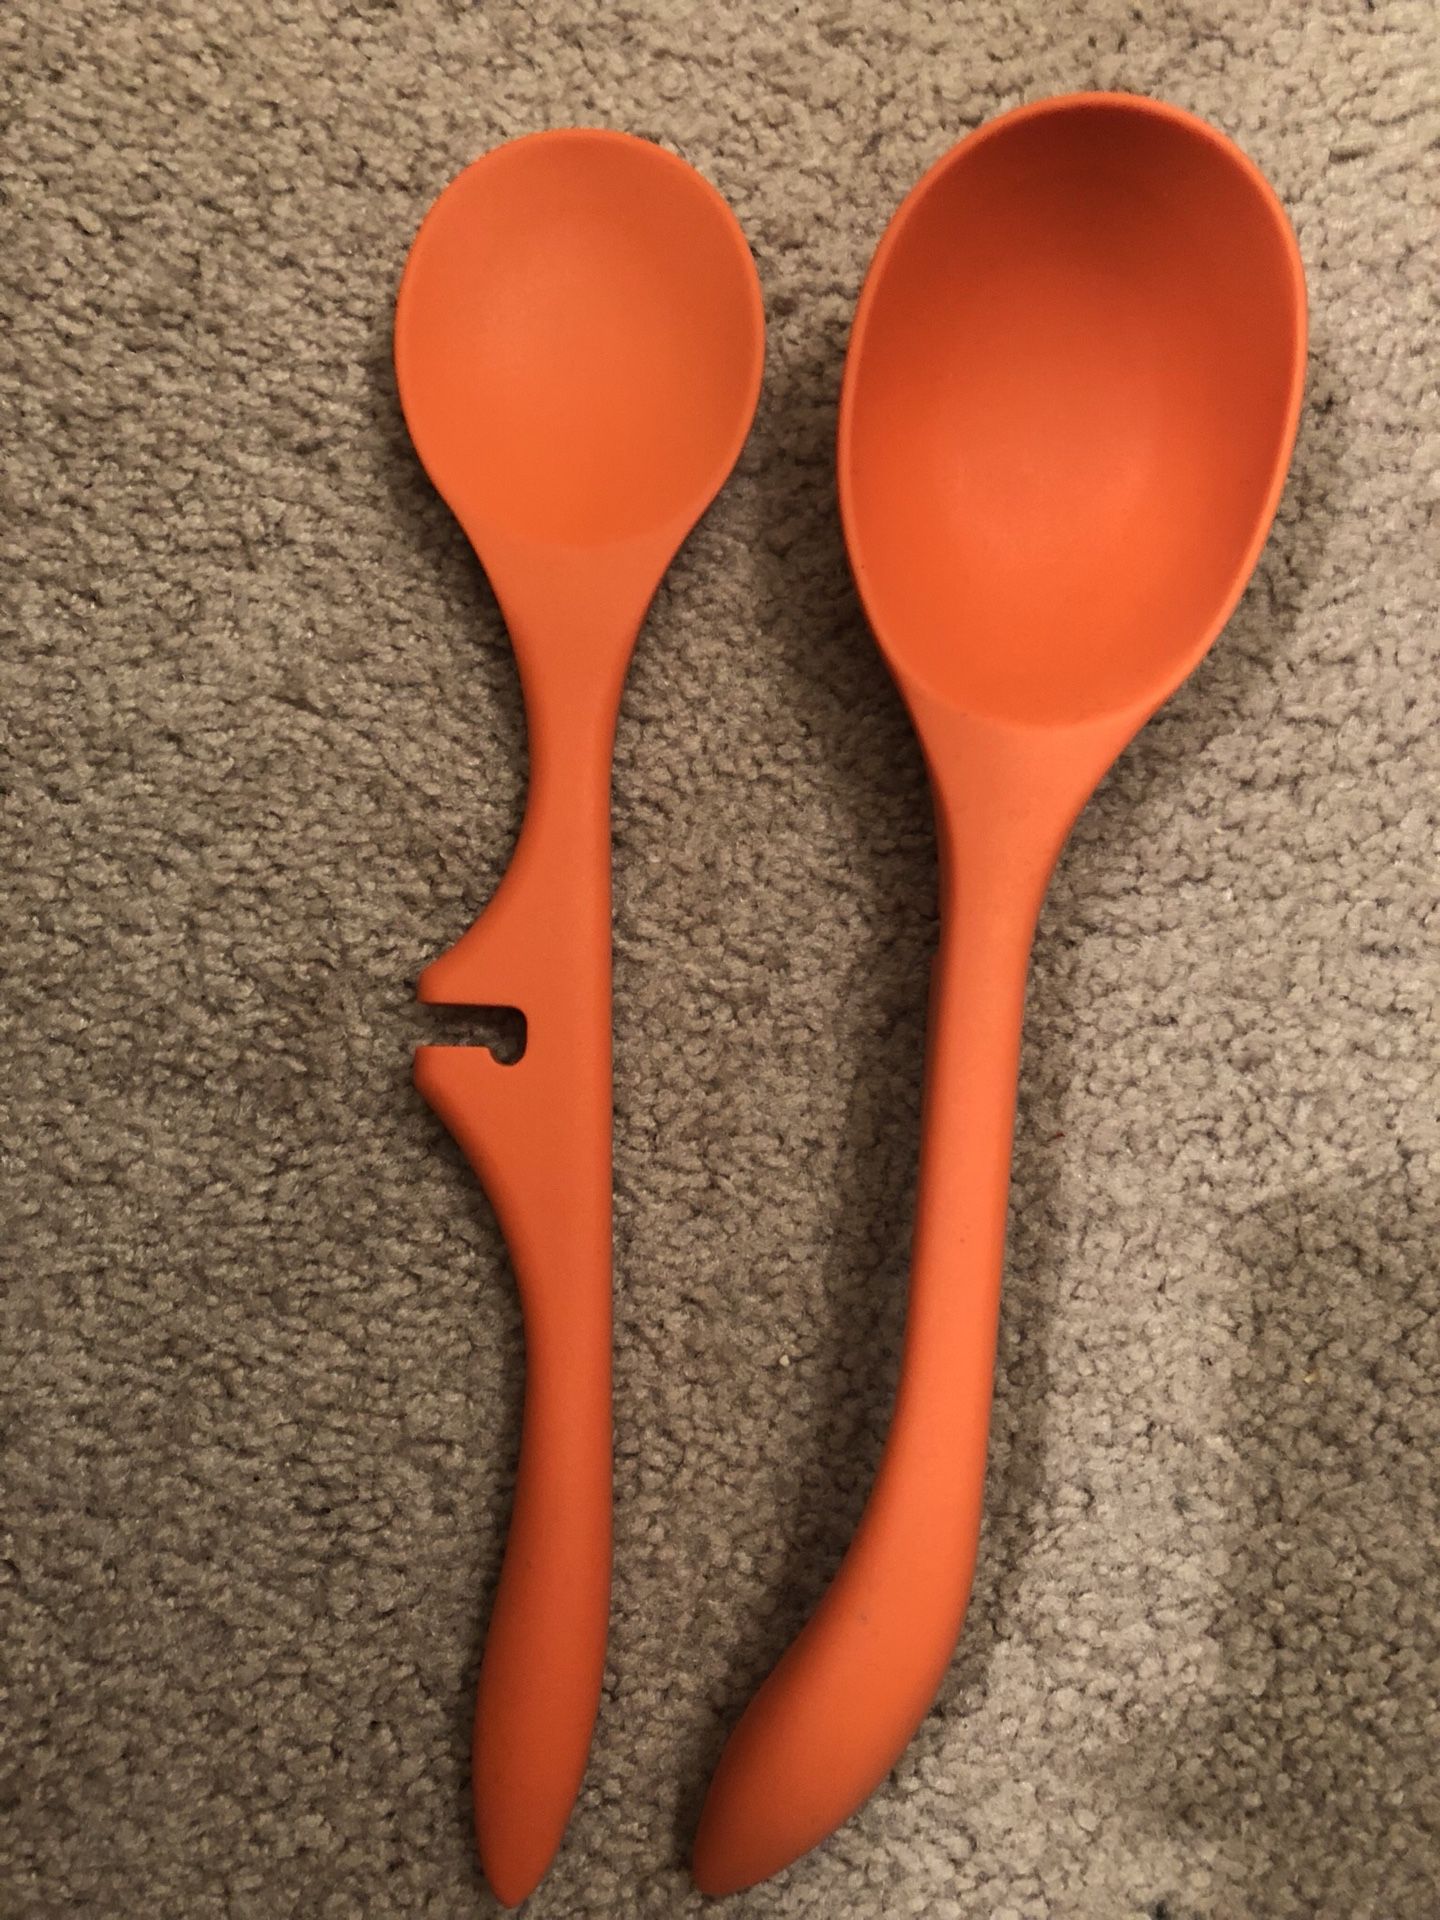 Rachel Ray spoon and ladle